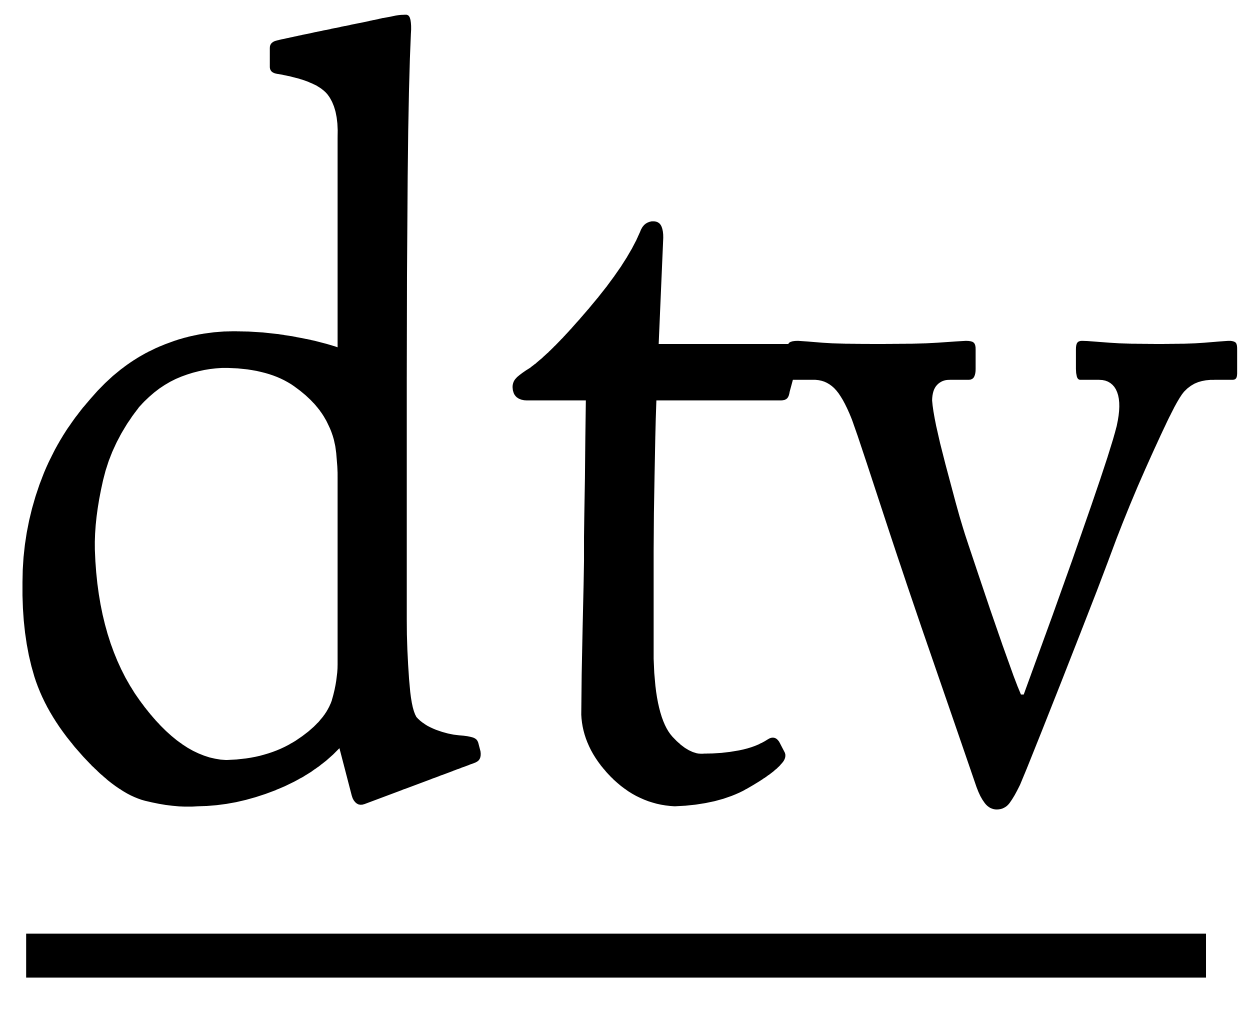 DTV Logo - File:Dtv logo.svg - Wikimedia Commons